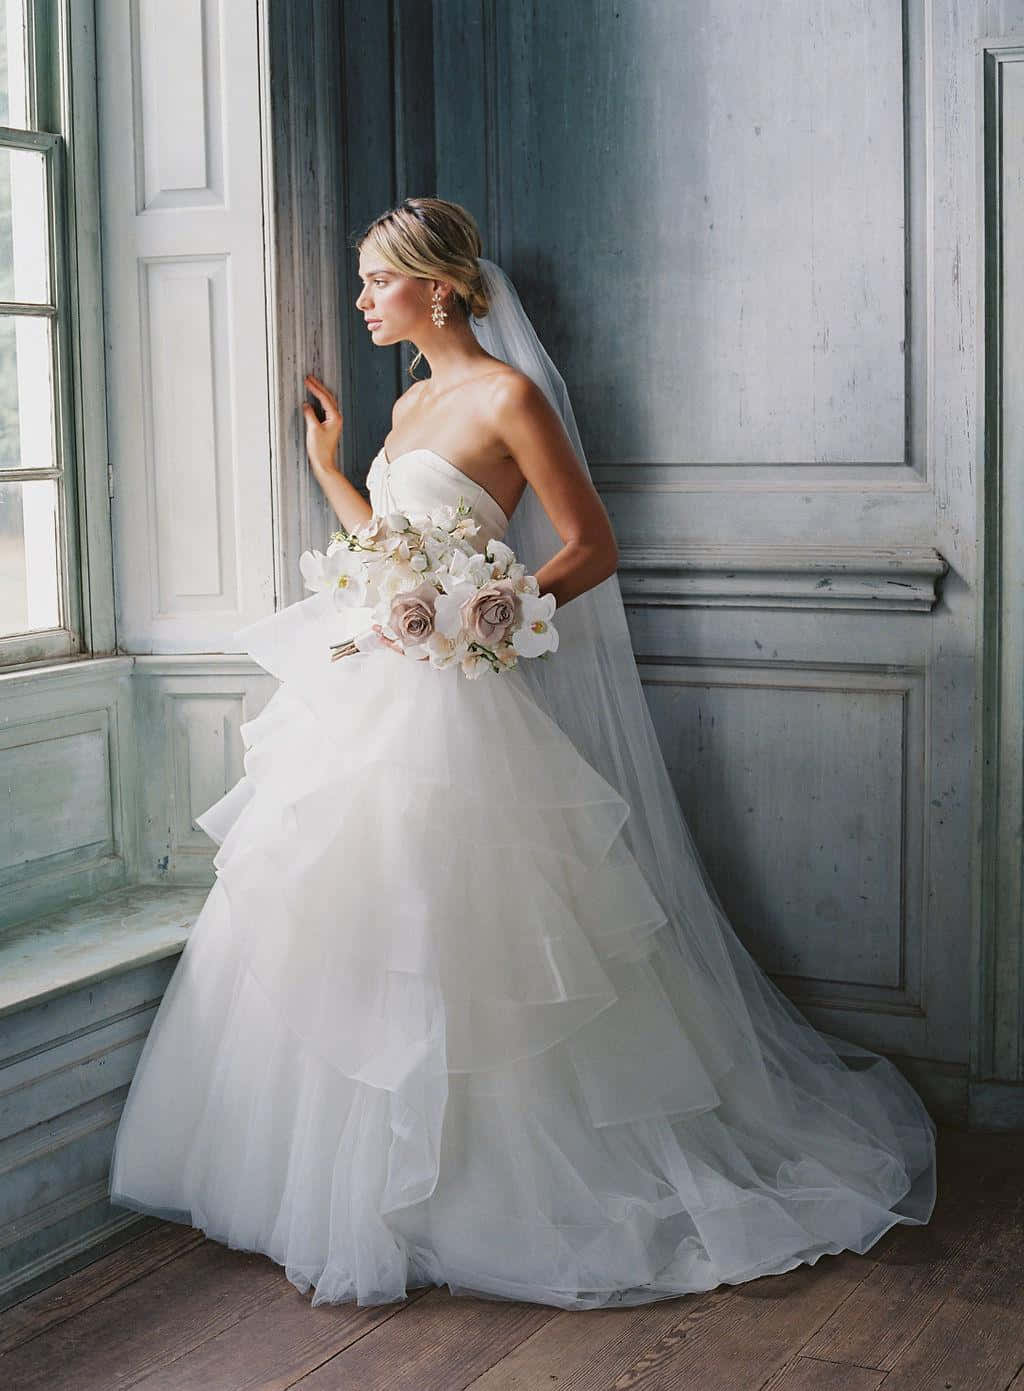 Look Beautiful in This Dazzling Bride's Dress Wallpaper